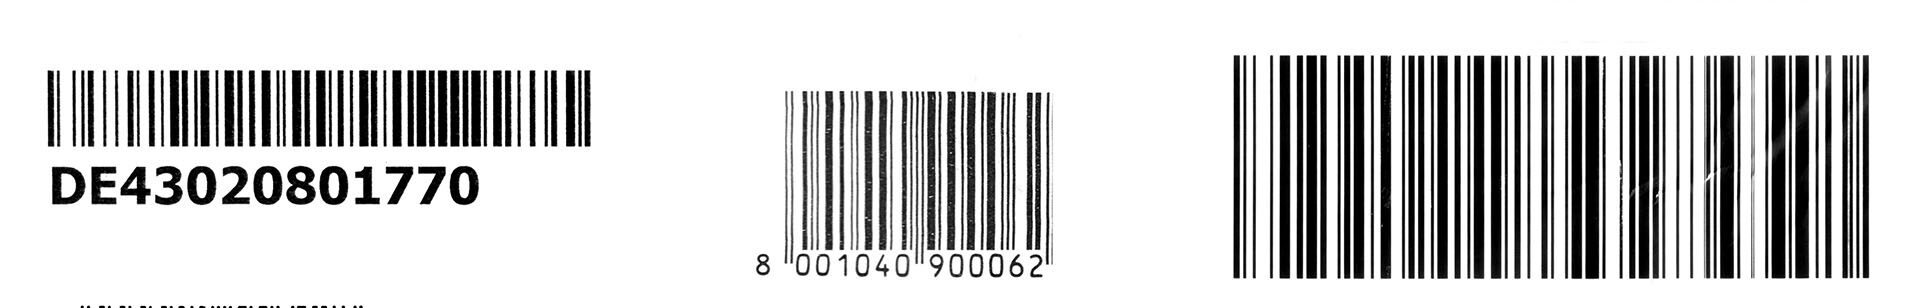 Barcodes RFID